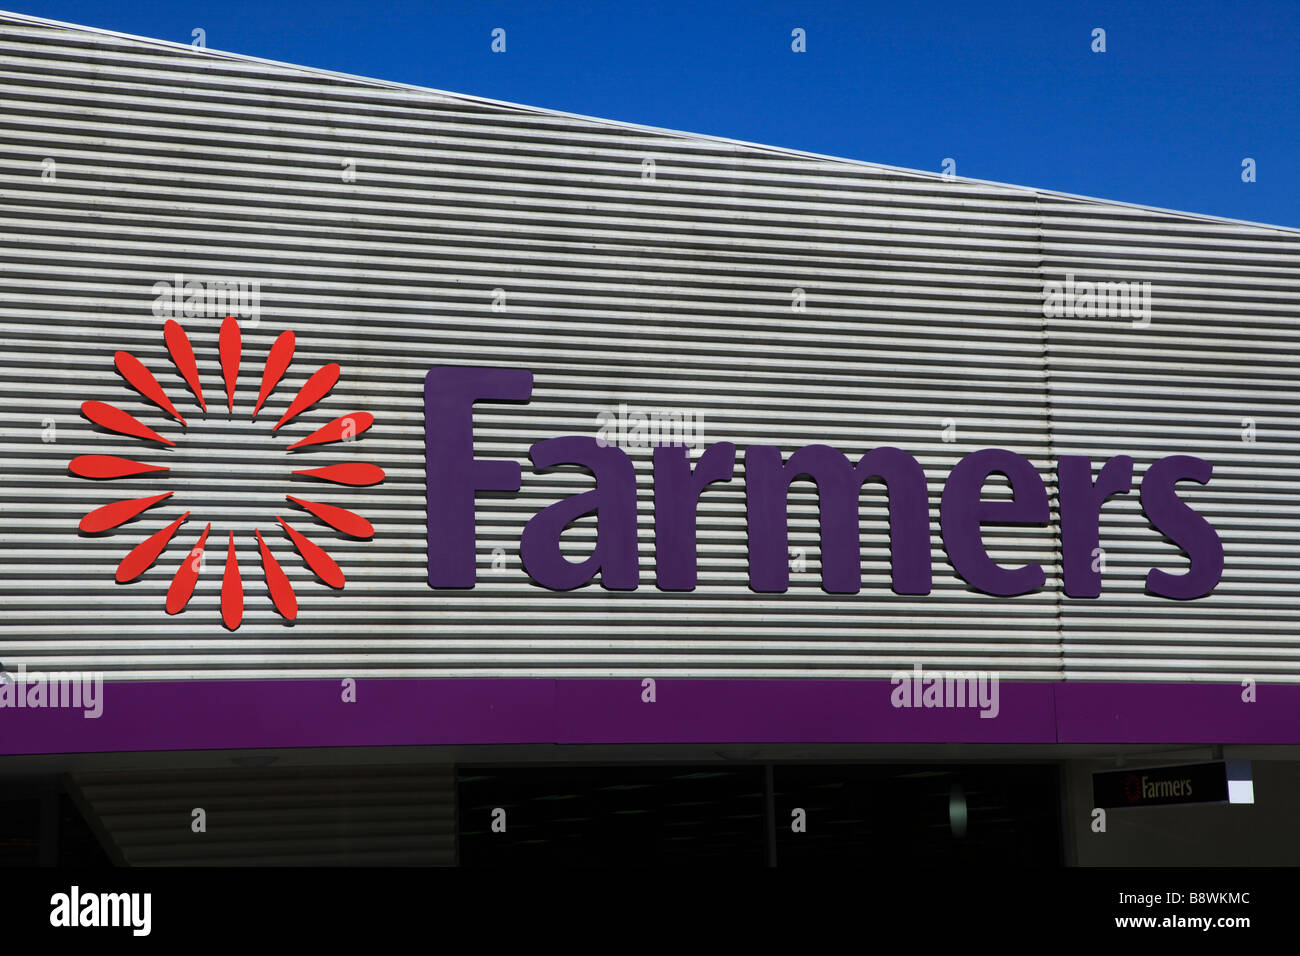 Farmers retail store sign,Ashburton,Mid Canterbury,South Island,New Zealand Stock Photo